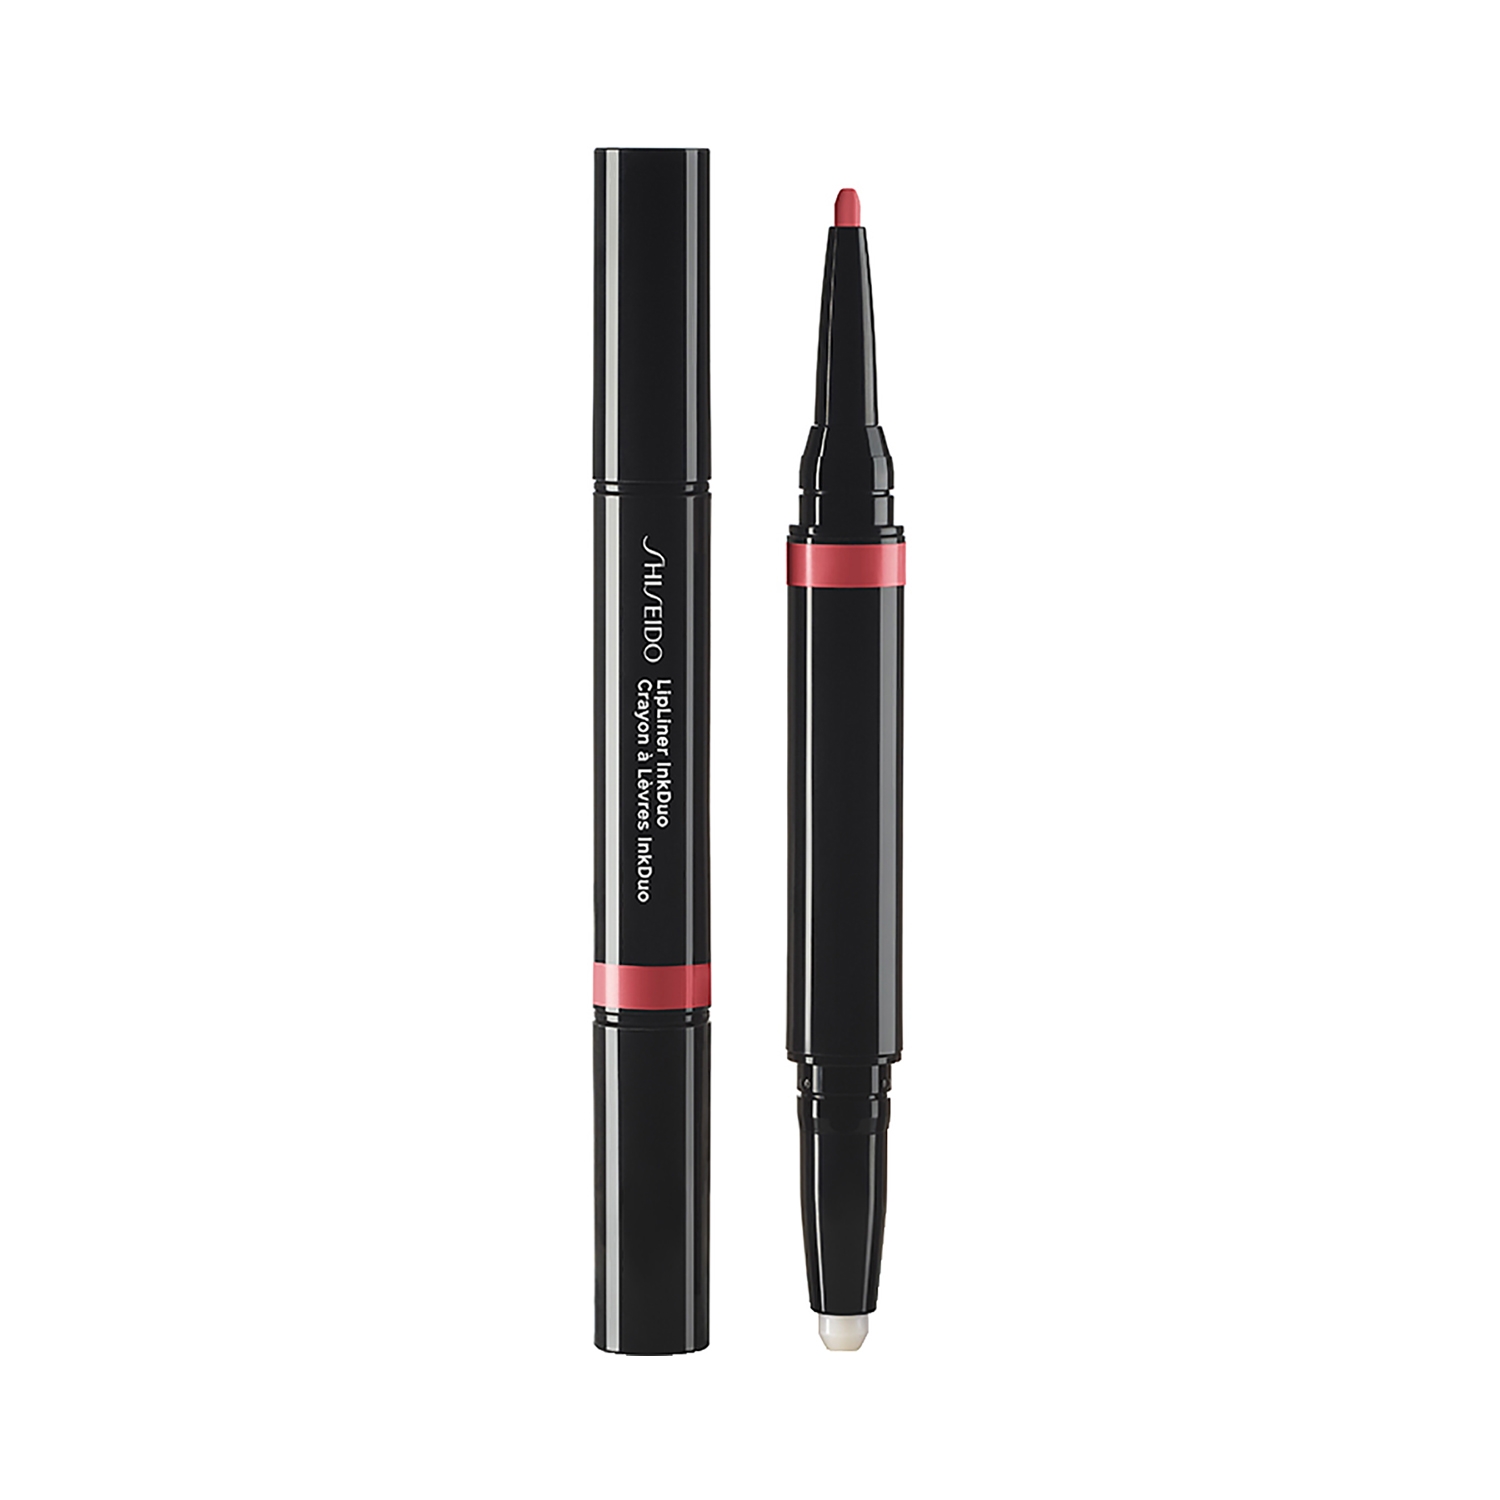 Shiseido | Shiseido Inkduo Prime and Line Duo Lipliner - 04 Rose Wood (0.9g)